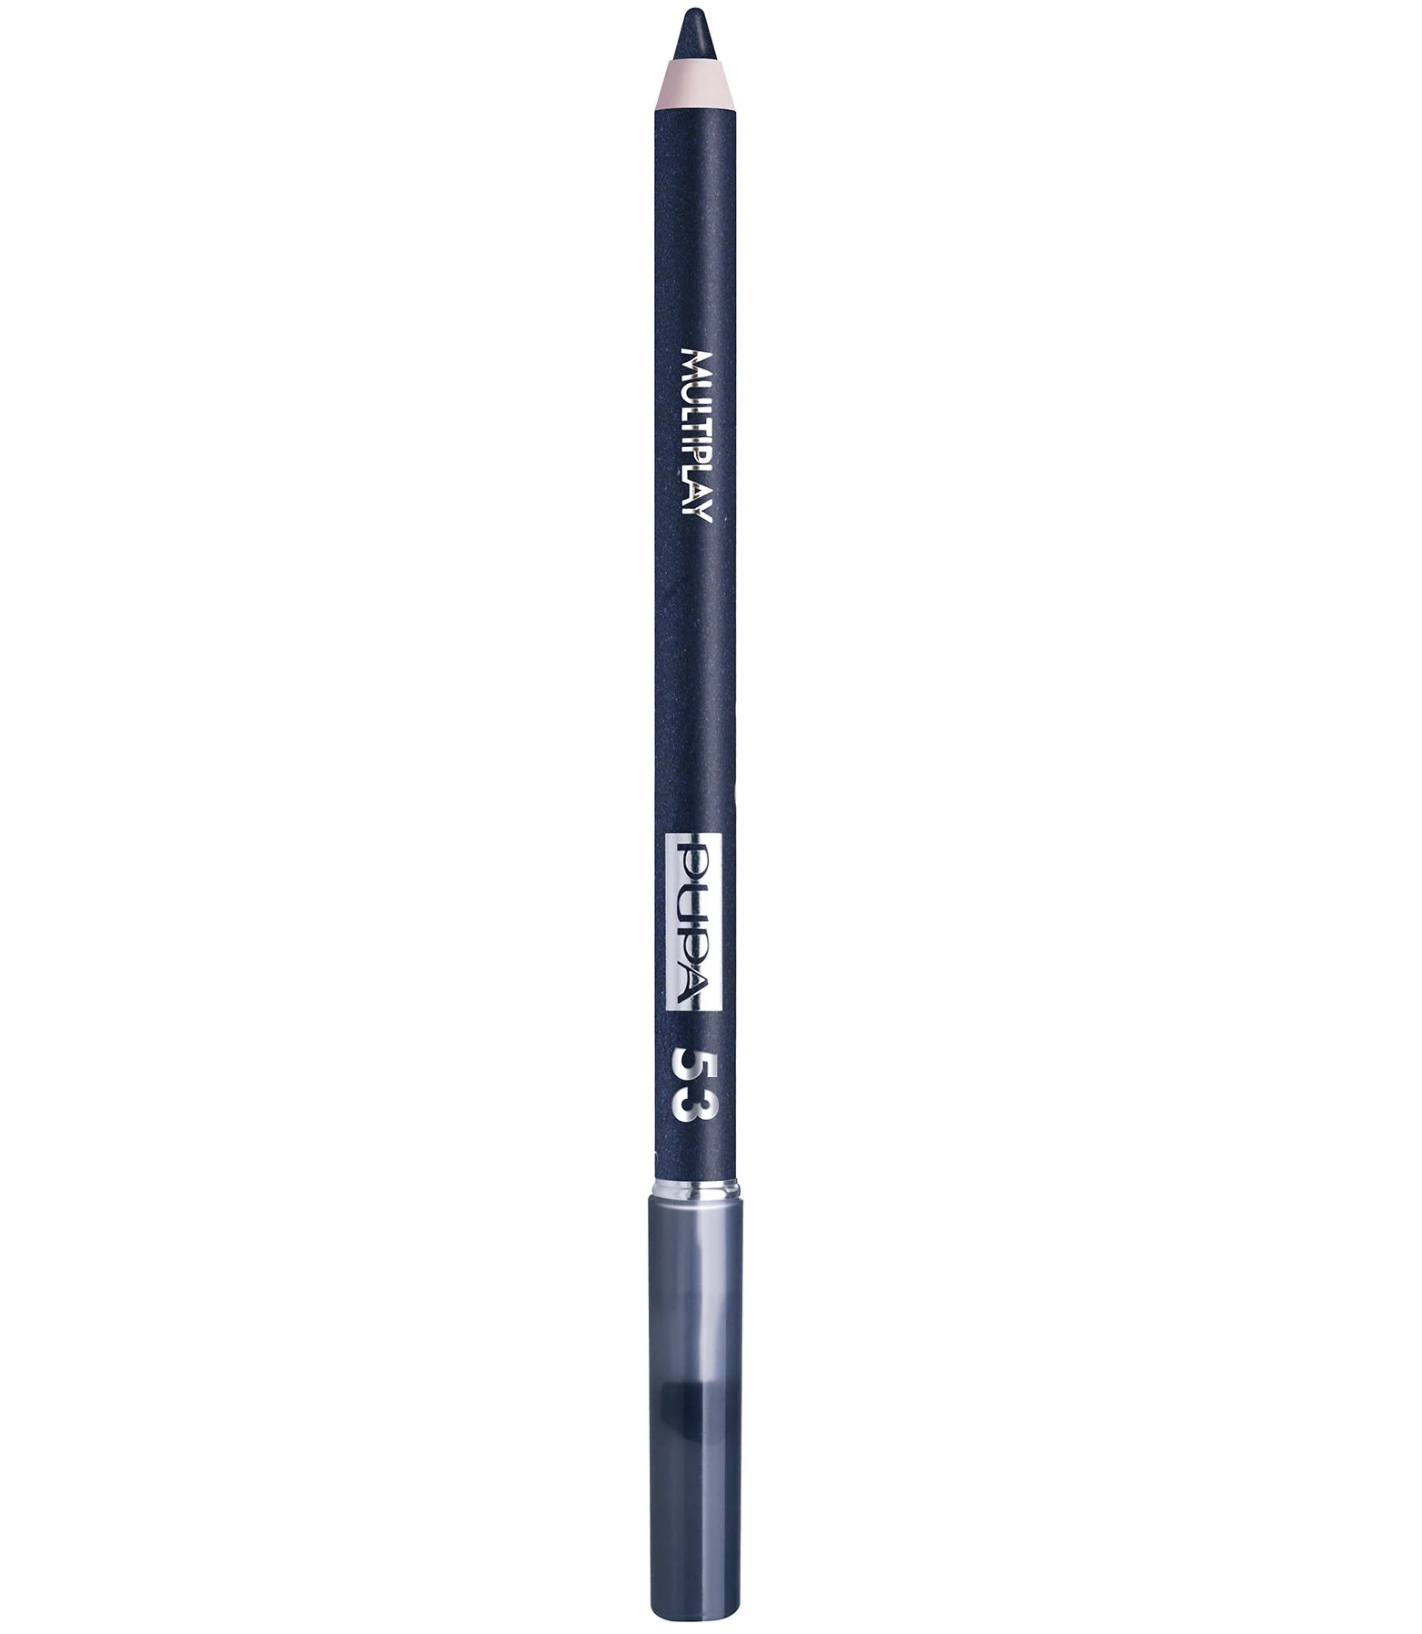   / Pupa -      Multiplay Eye Pencil  53   1,2 